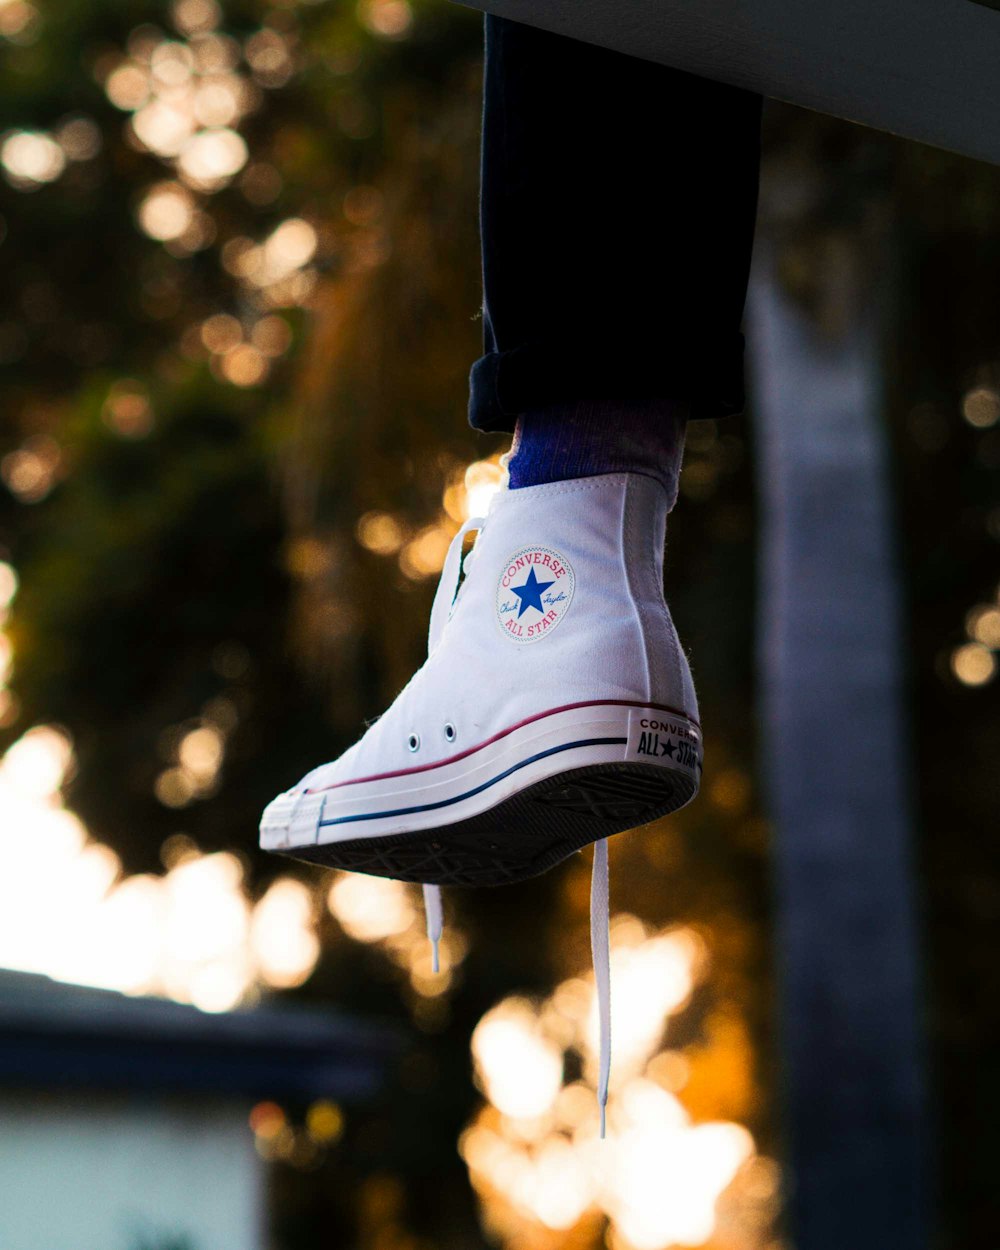 Person, die blau-weiße Converse All Star High Top Sneakers trägt